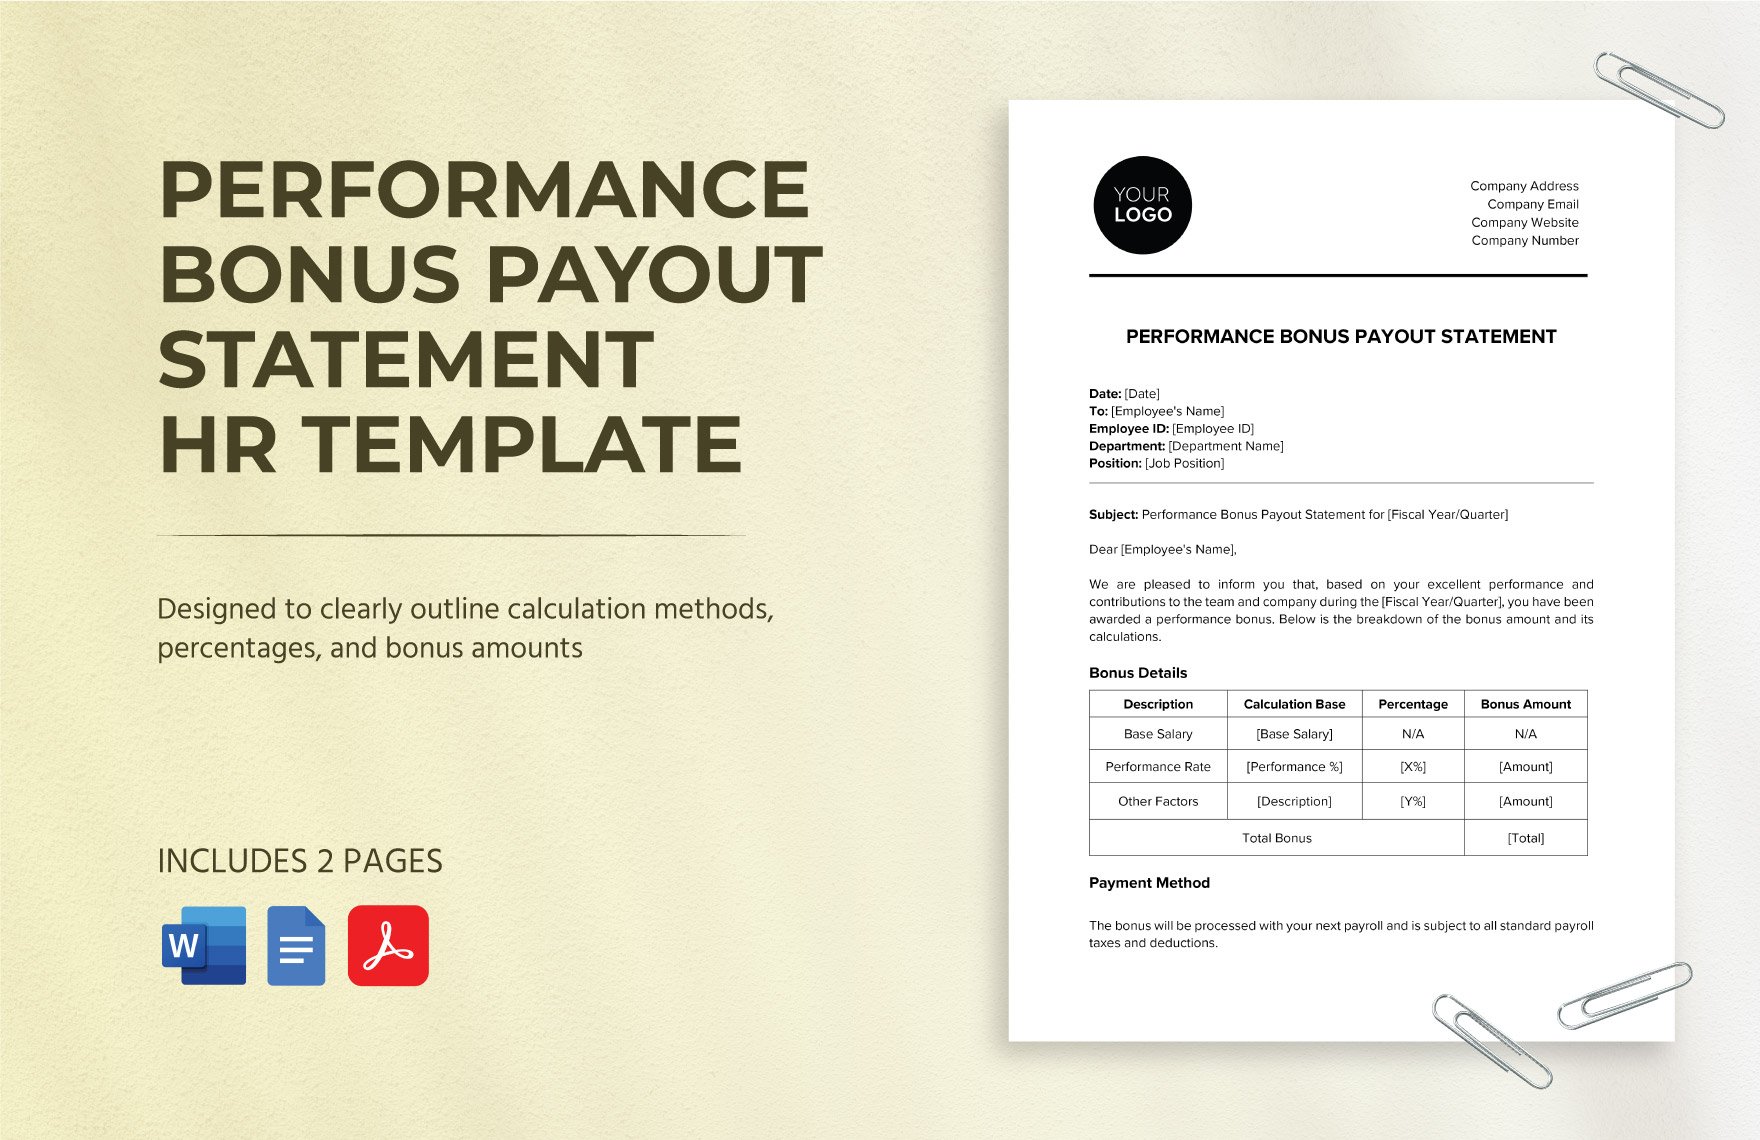 Performance Bonus Payout Statement HR Template